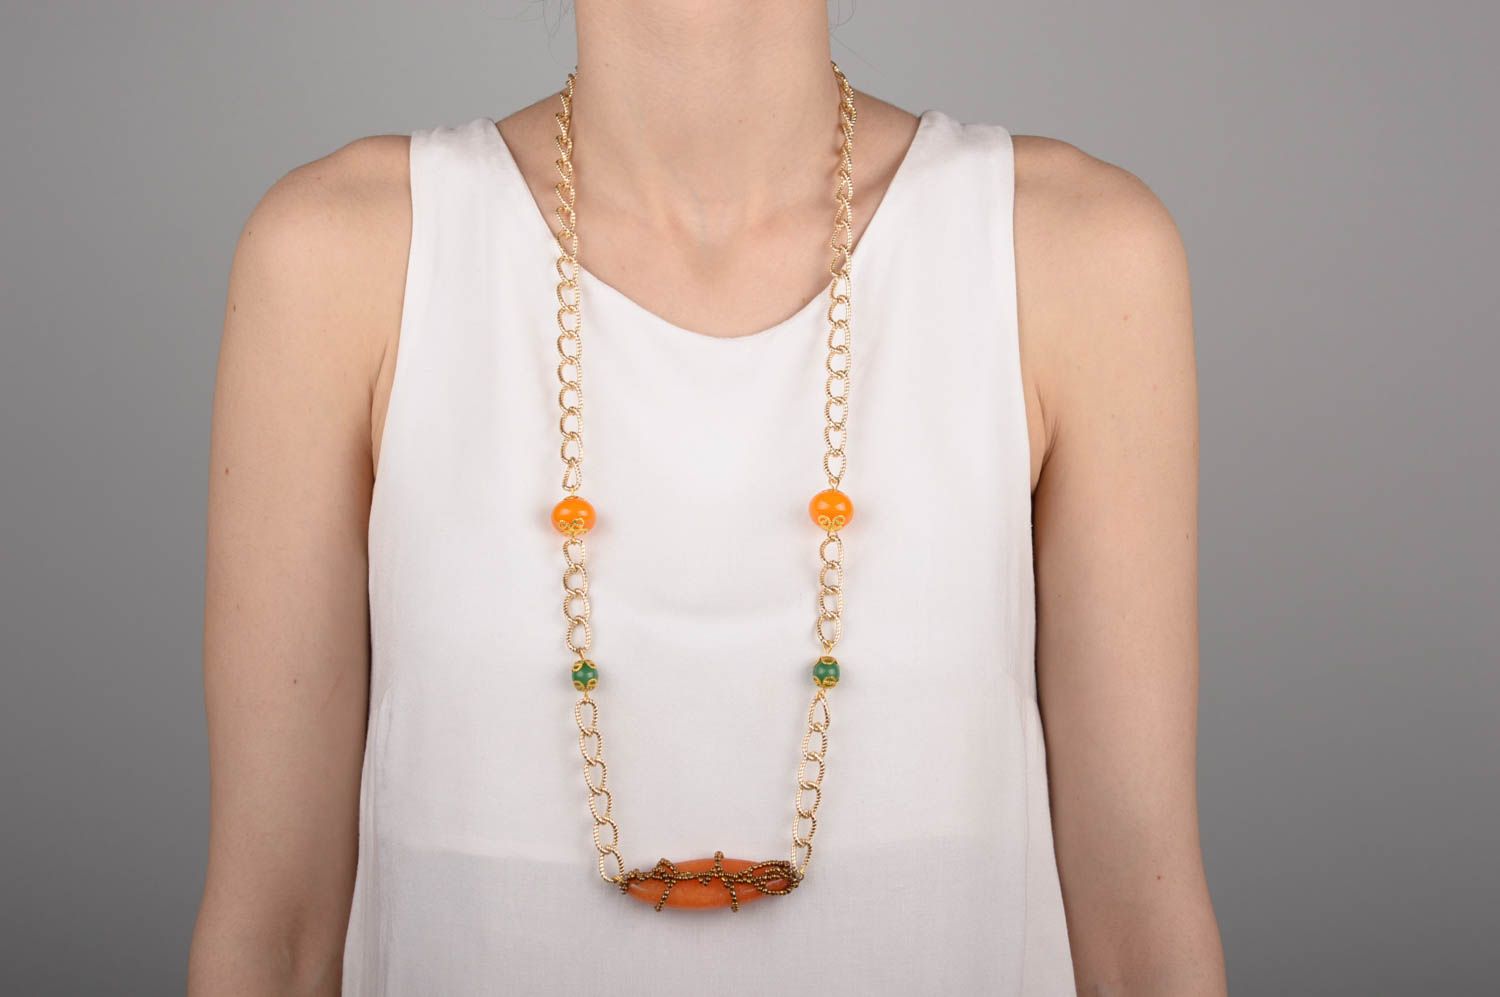 Stylish designer necklace handmade necklace natural stone jewelry cute gift photo 5